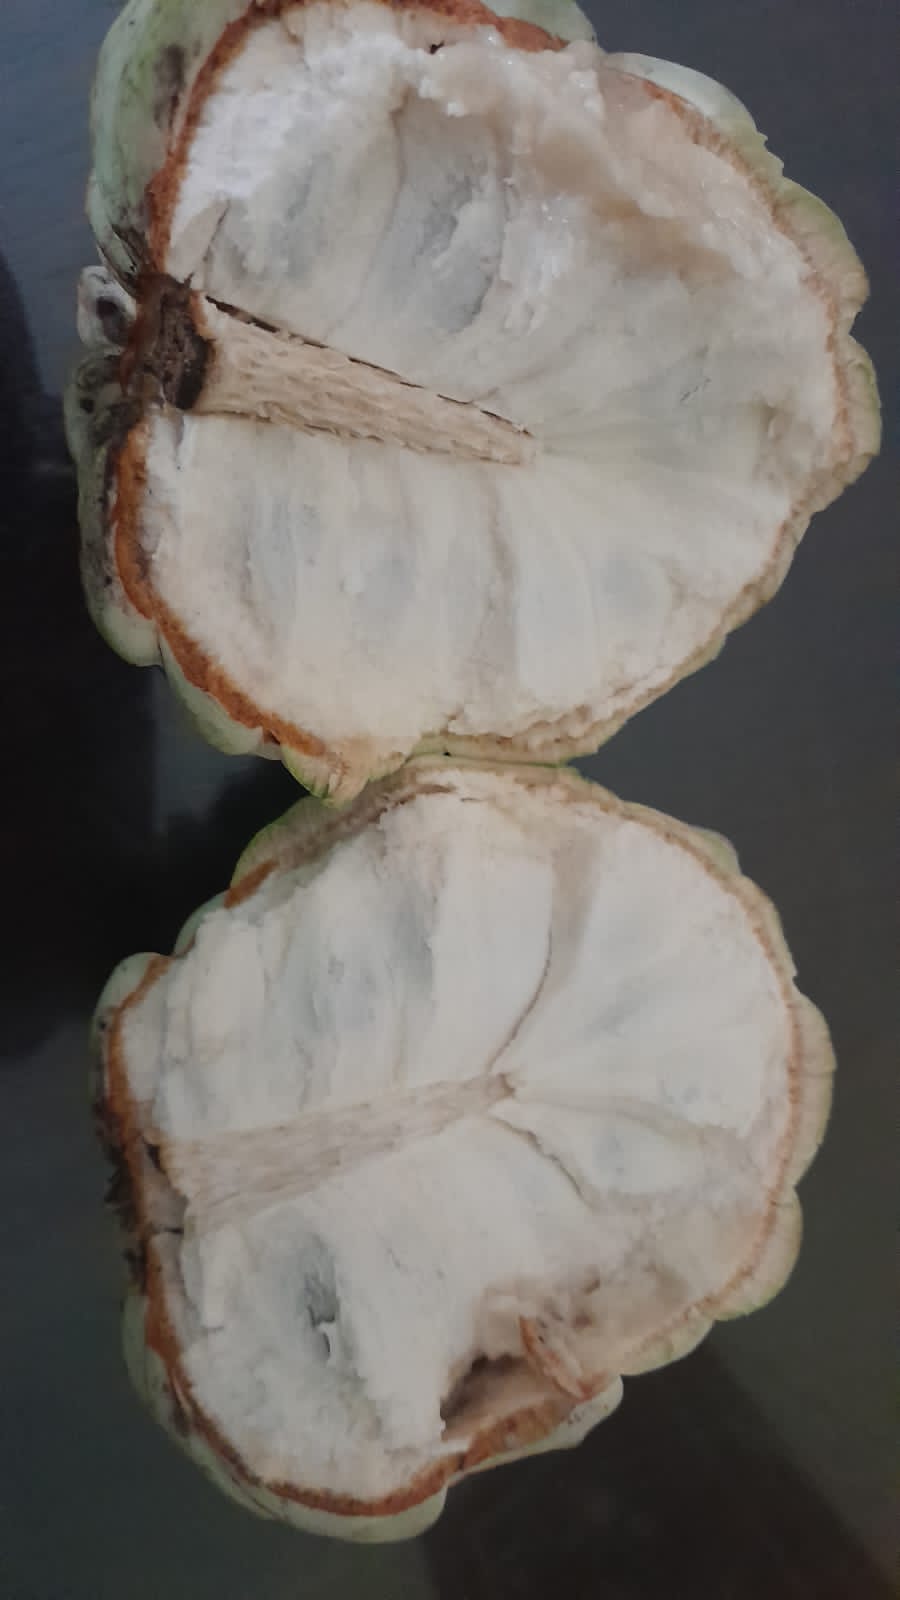 Annona macroprophyllata "Coconut Cream"